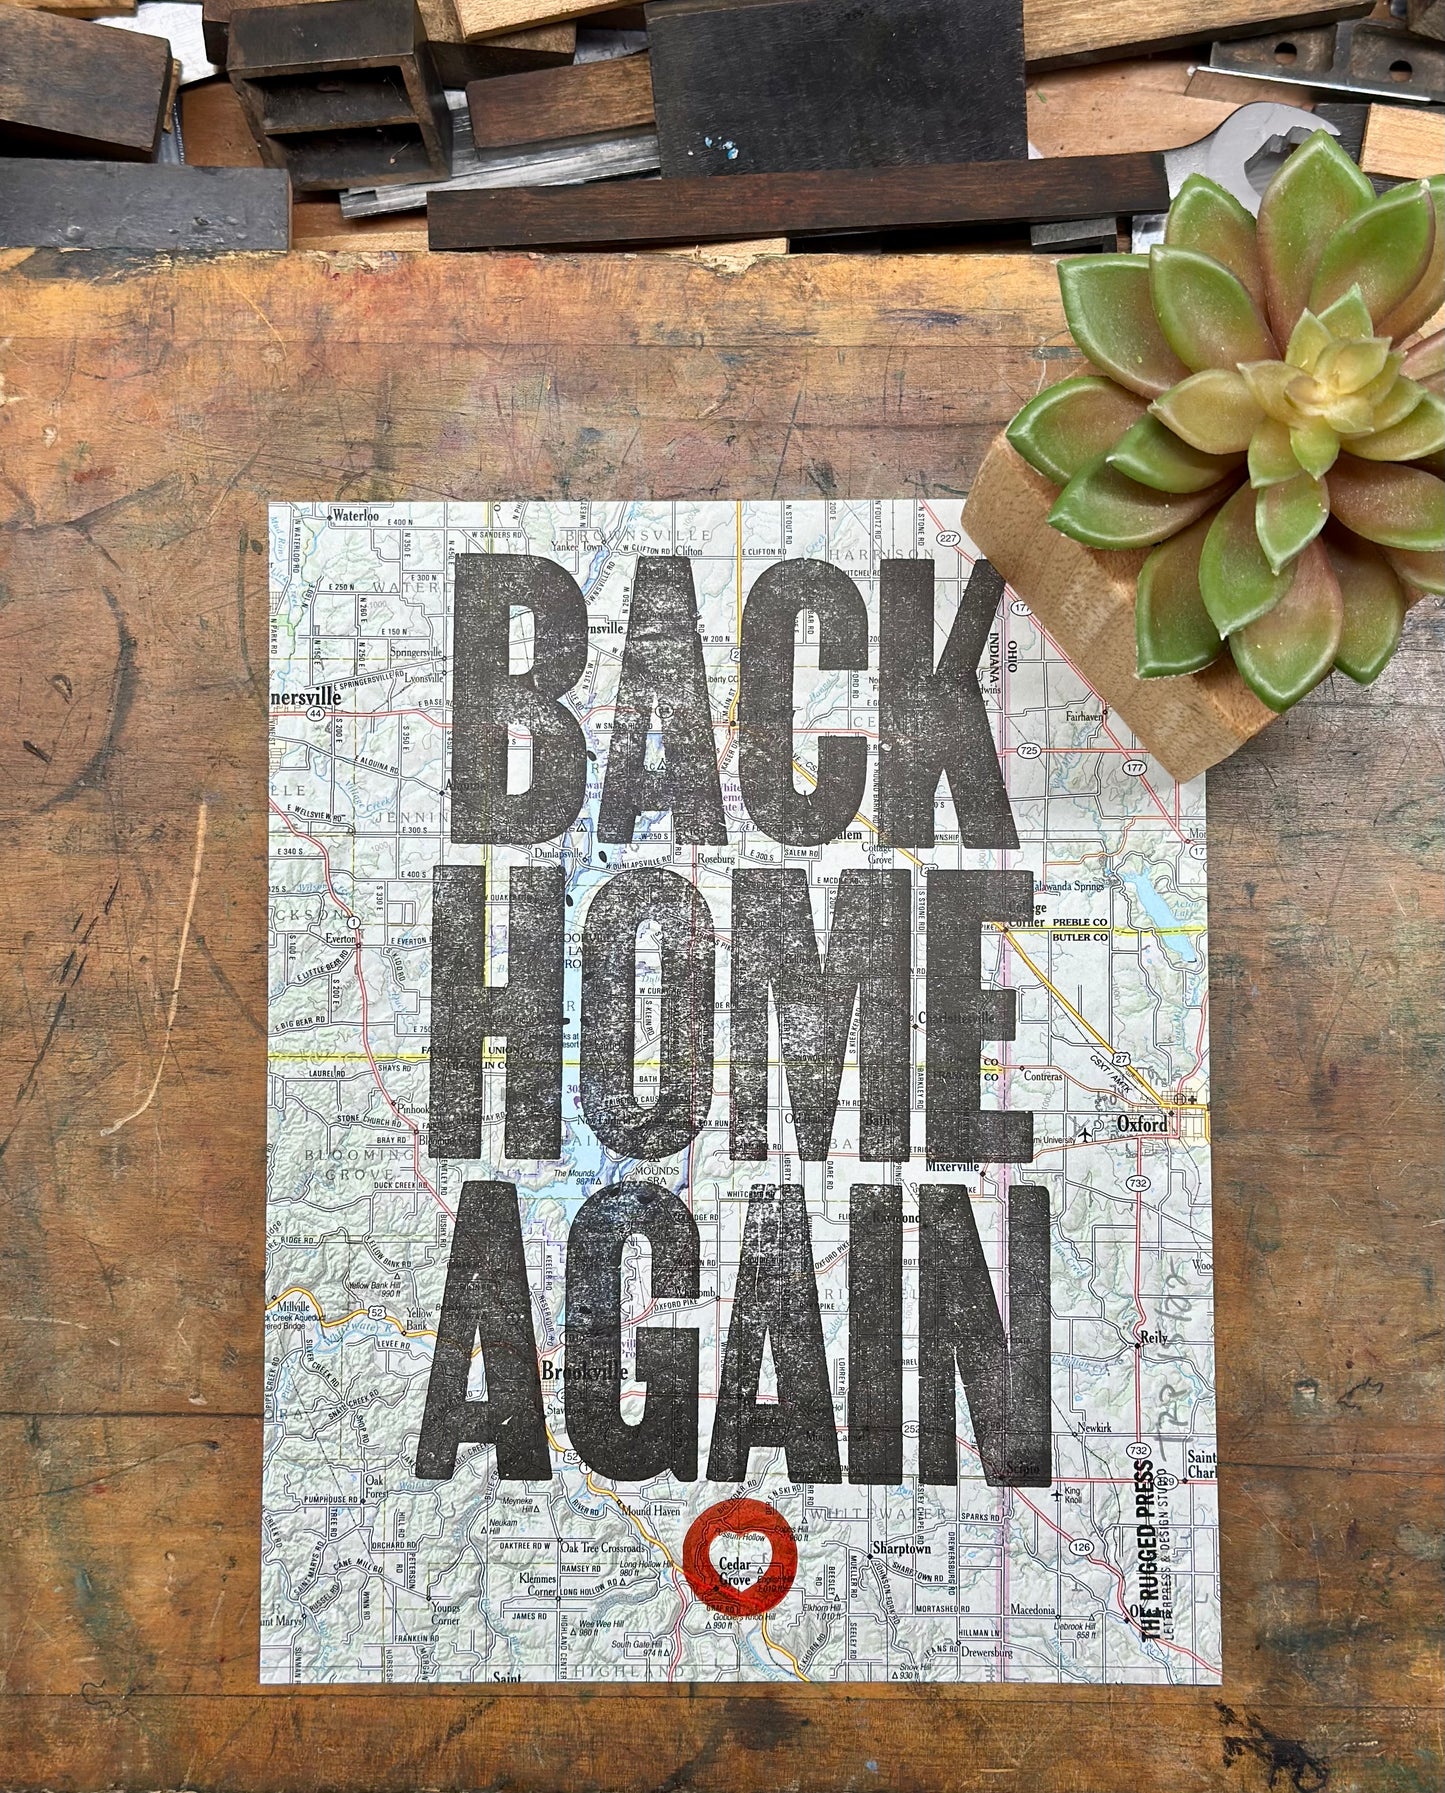 Back Home Again - 8x10 Letterpress print on road map